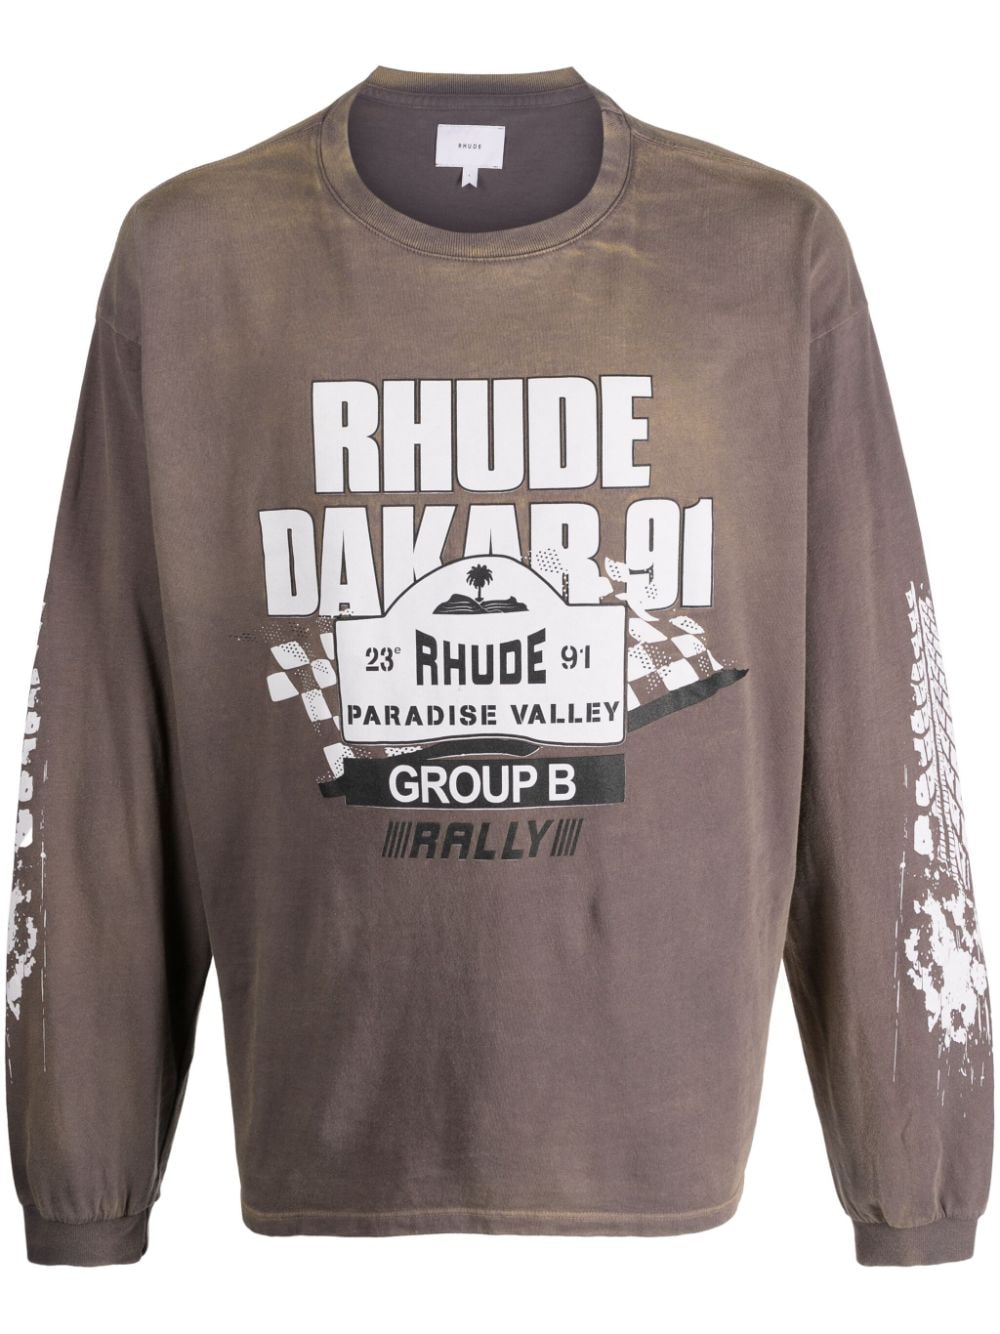 Rhude Dakar 91 cotton sweatshirt Grijs